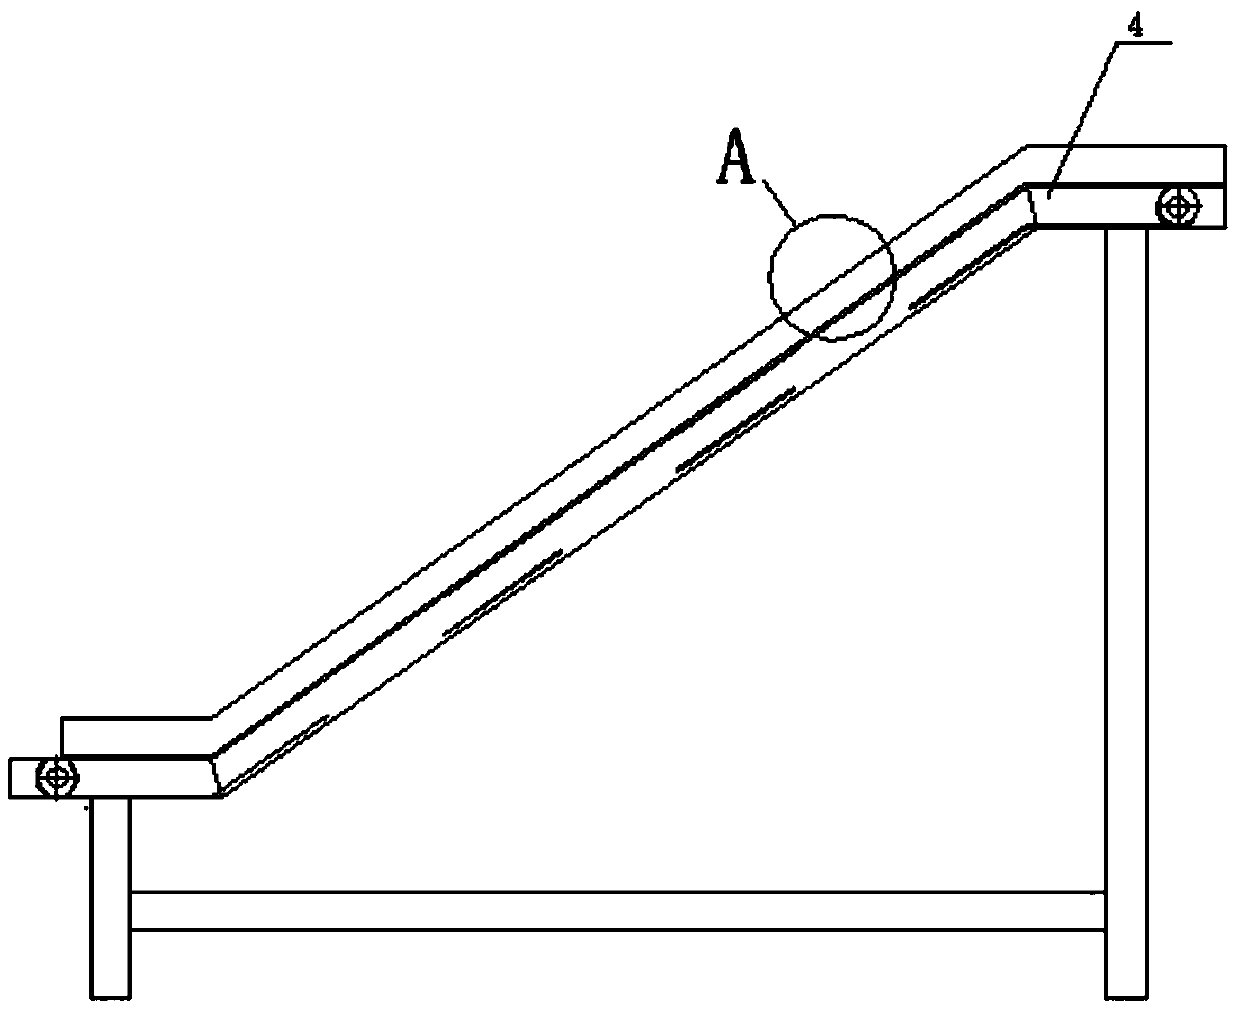 Uniformly distributed separating conveyor belt